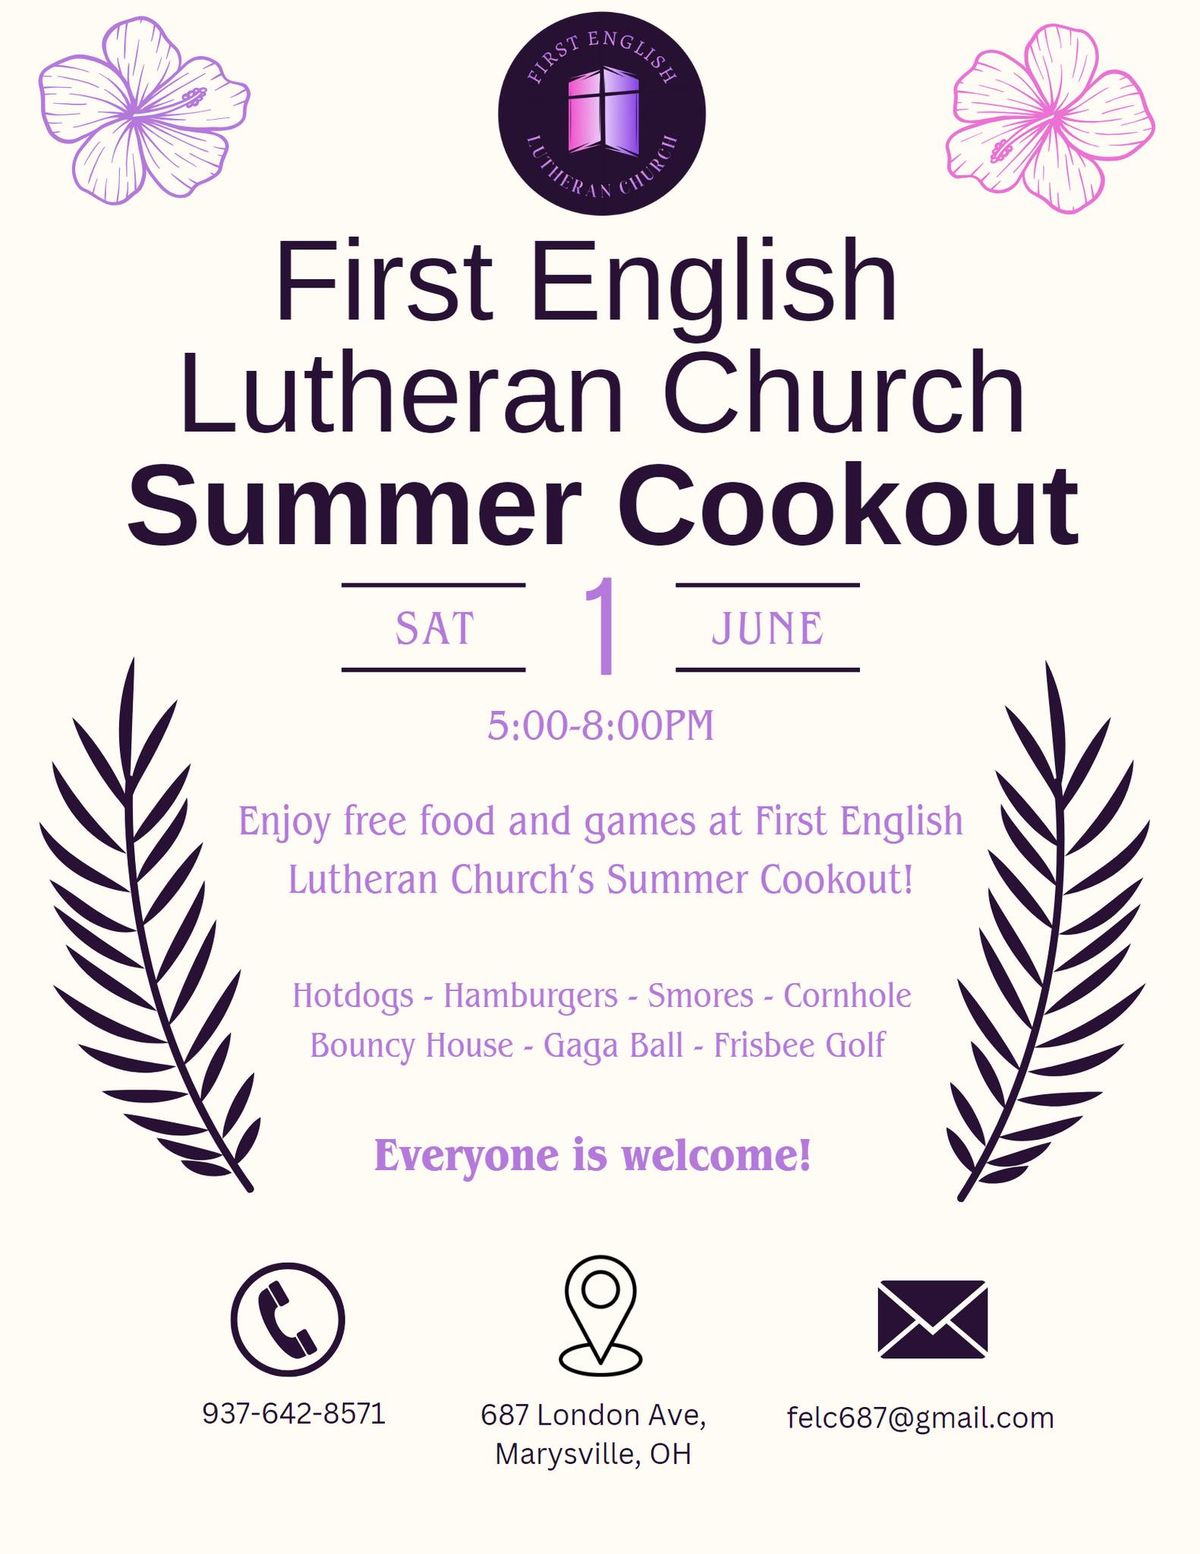 First English Lutheran Church Summer Cookout